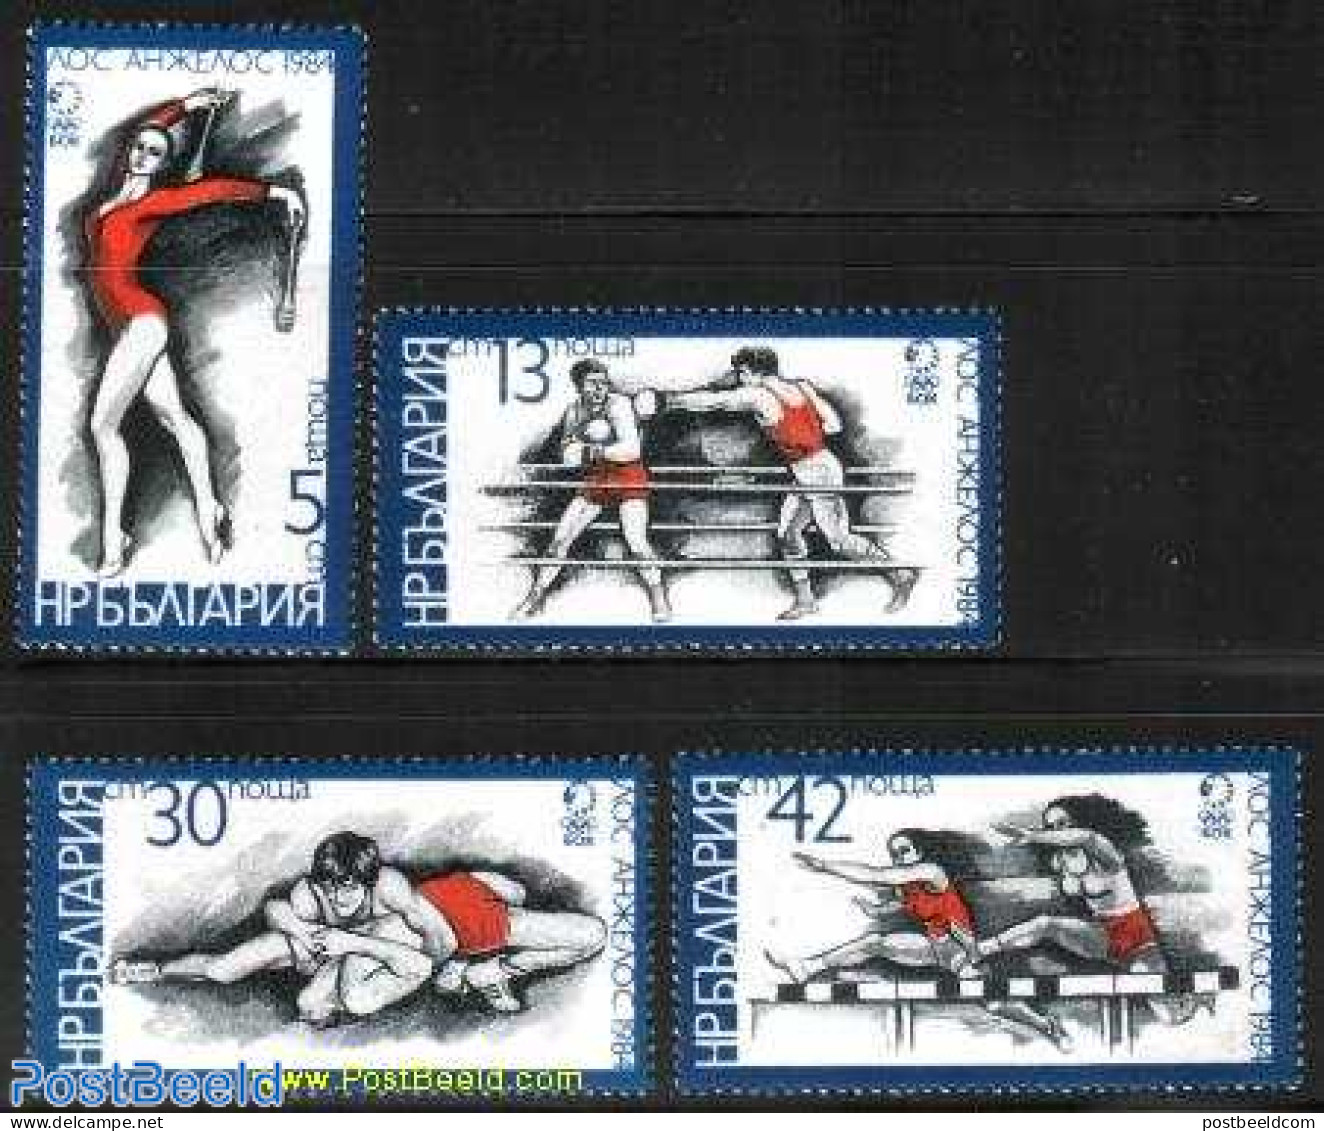 Bulgaria 1983 Olympic Games Los Angeles 4v, Mint NH, Sport - Athletics - Boxing - Gymnastics - Olympic Games - Nuovi